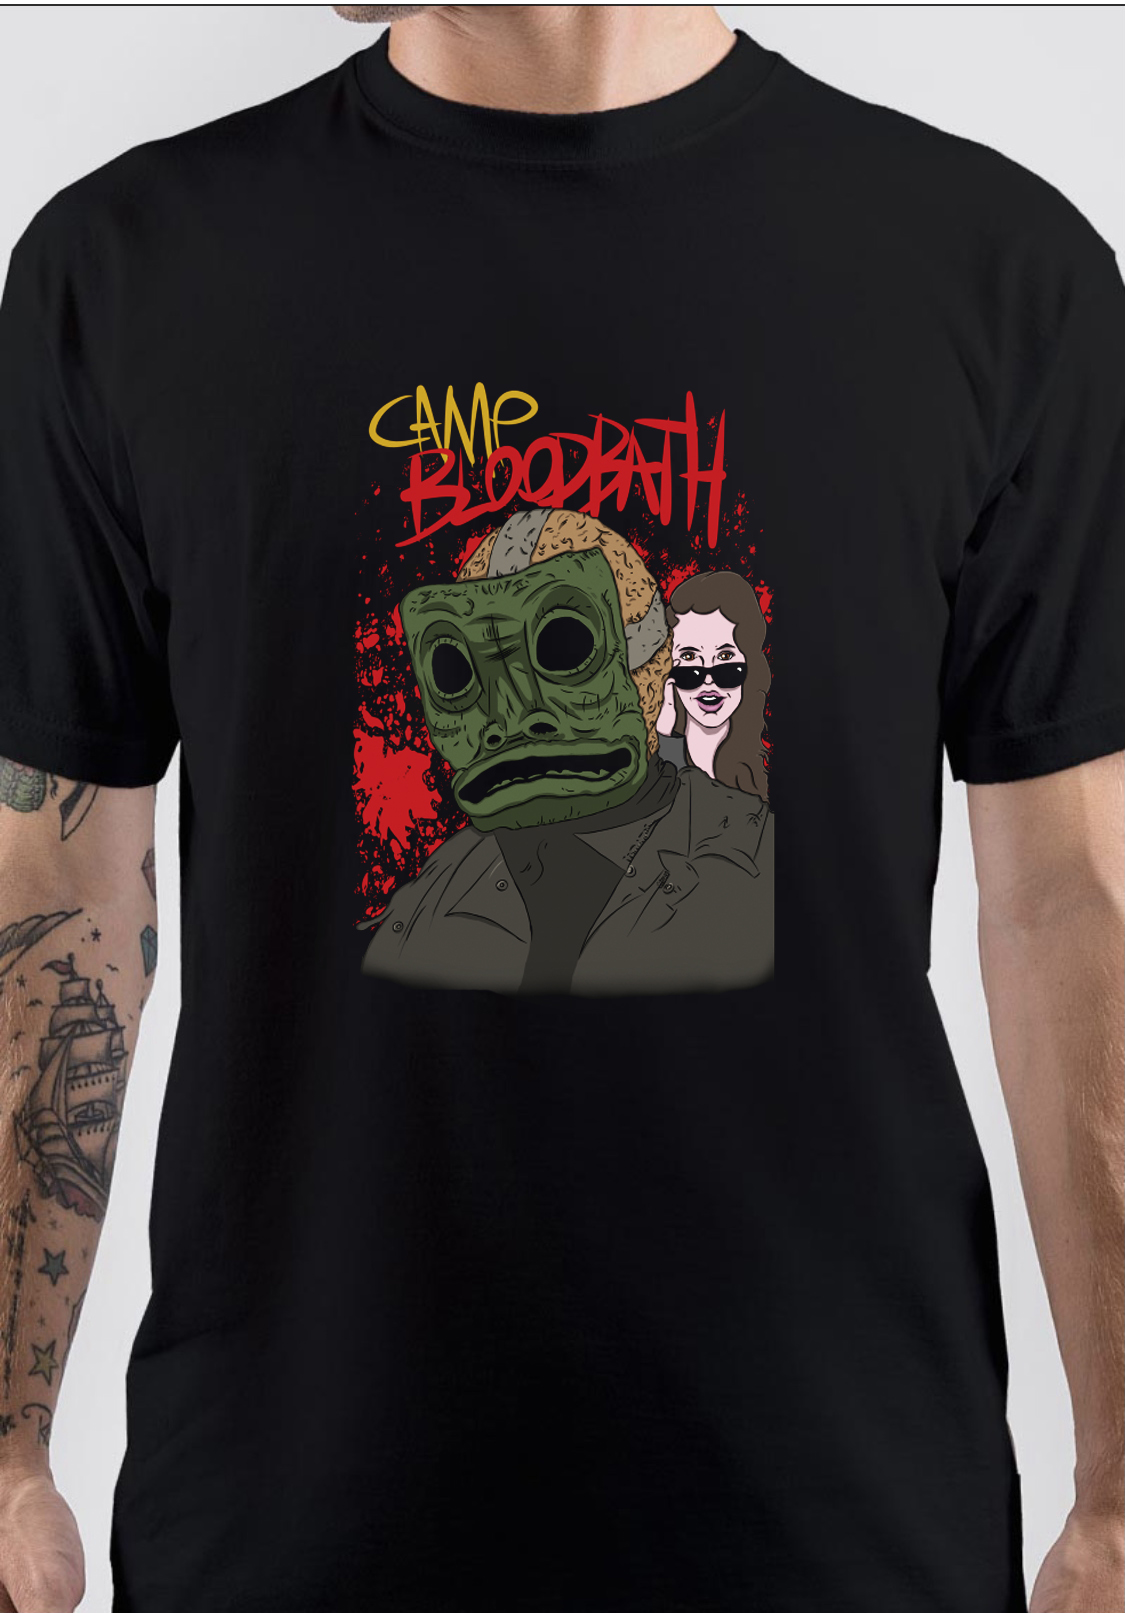 Bloodbath T-Shirt And Merchandise